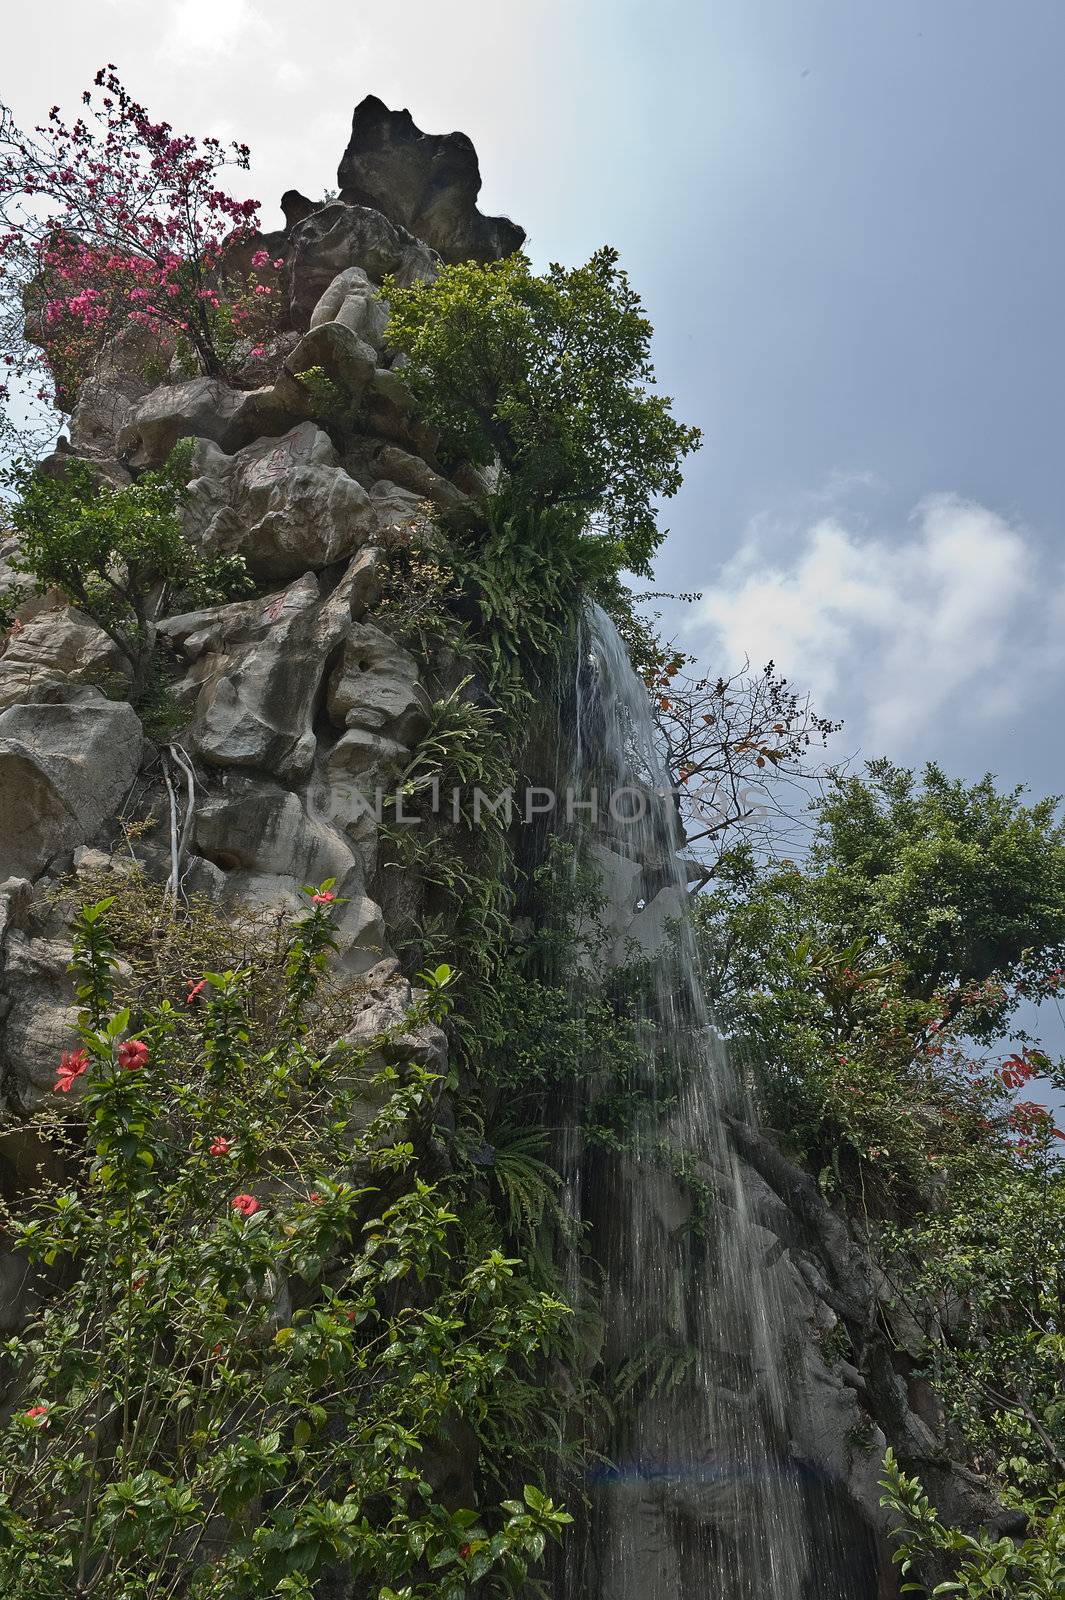 Quinghui Garden man made from granite stones mountain